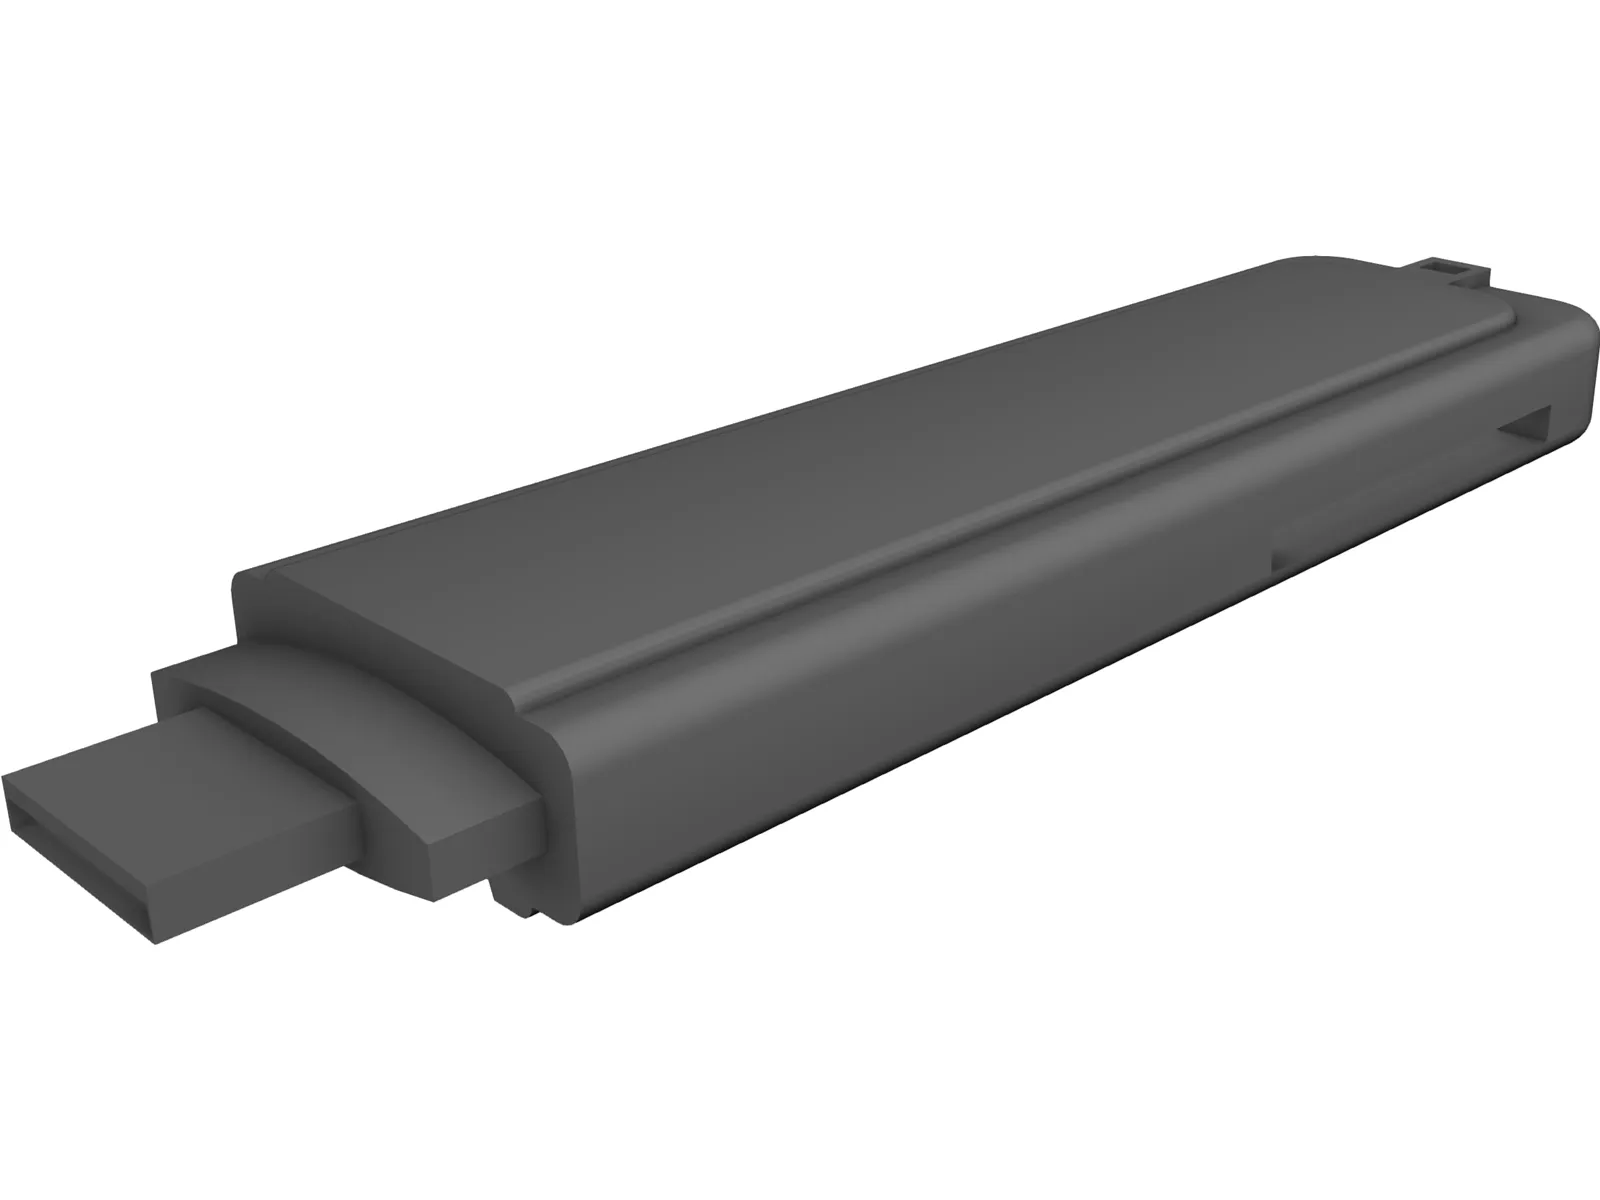 USB Flash Drive 3D Model